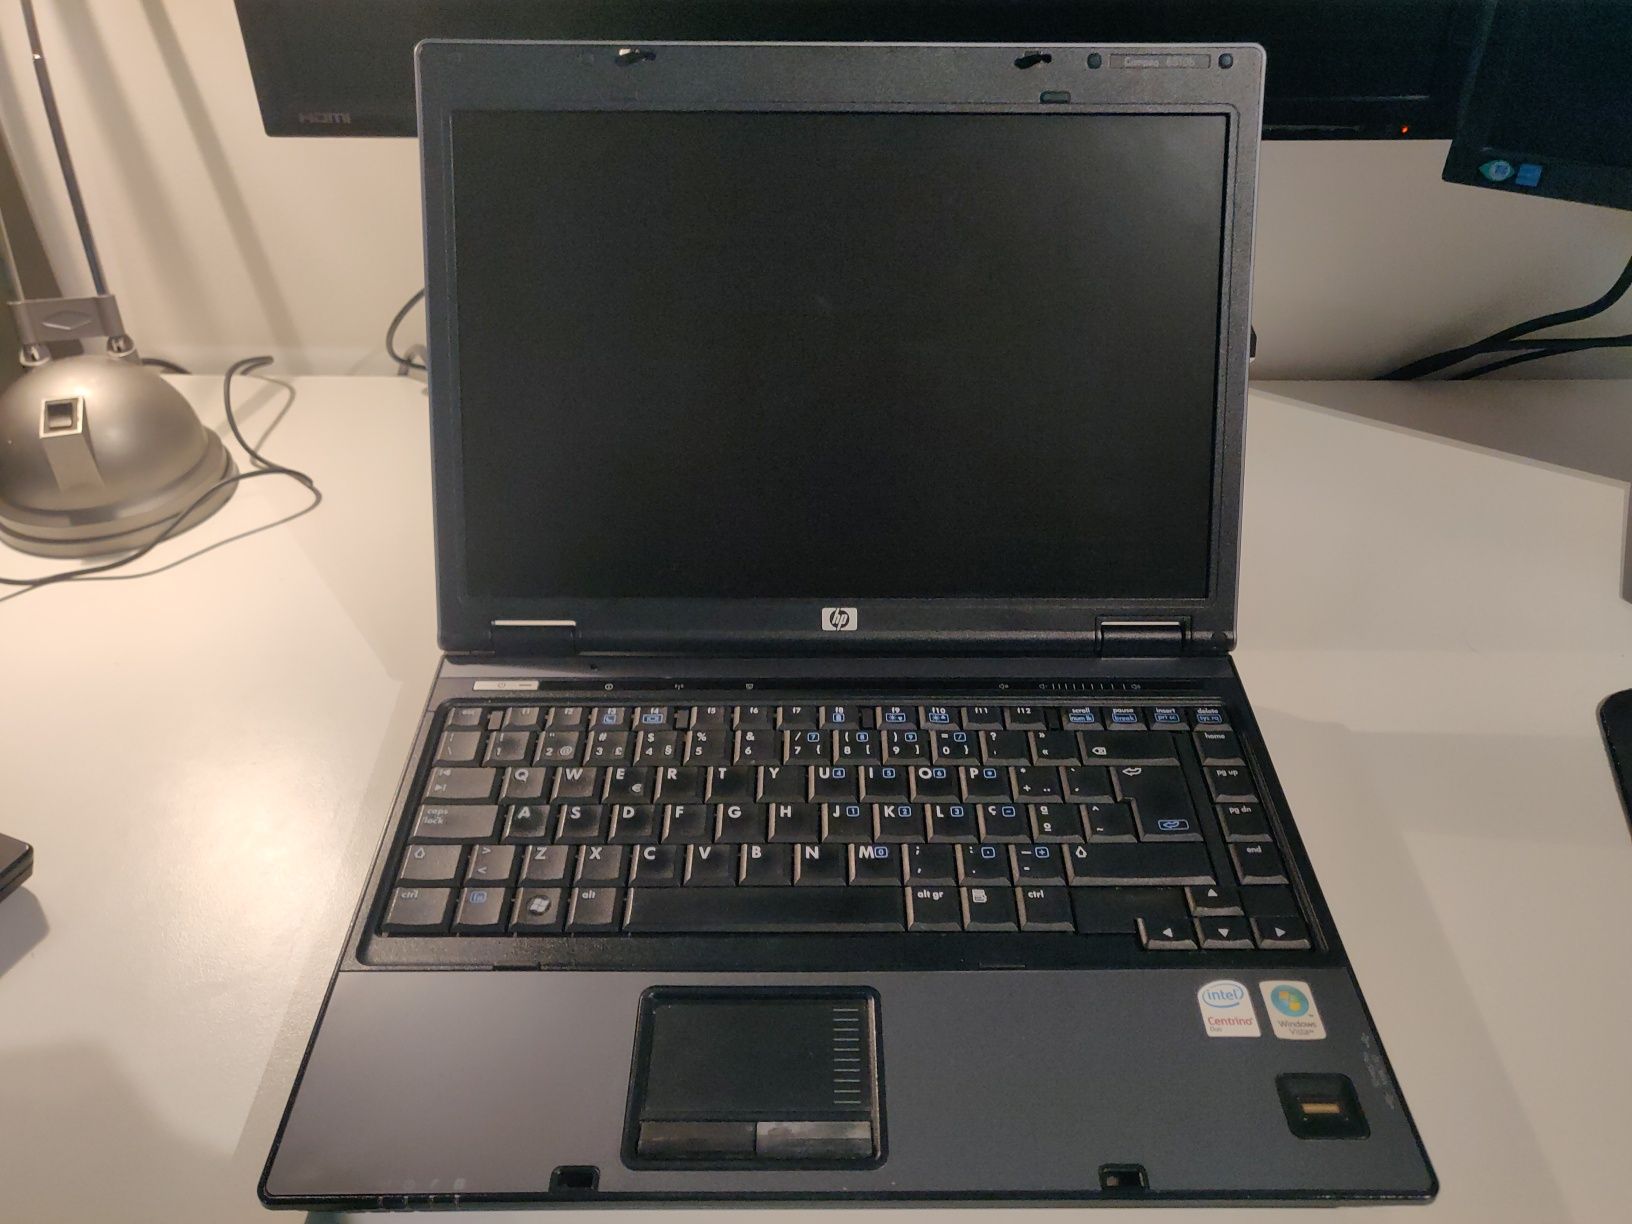 HP Compaq 6510b - Ubuntu